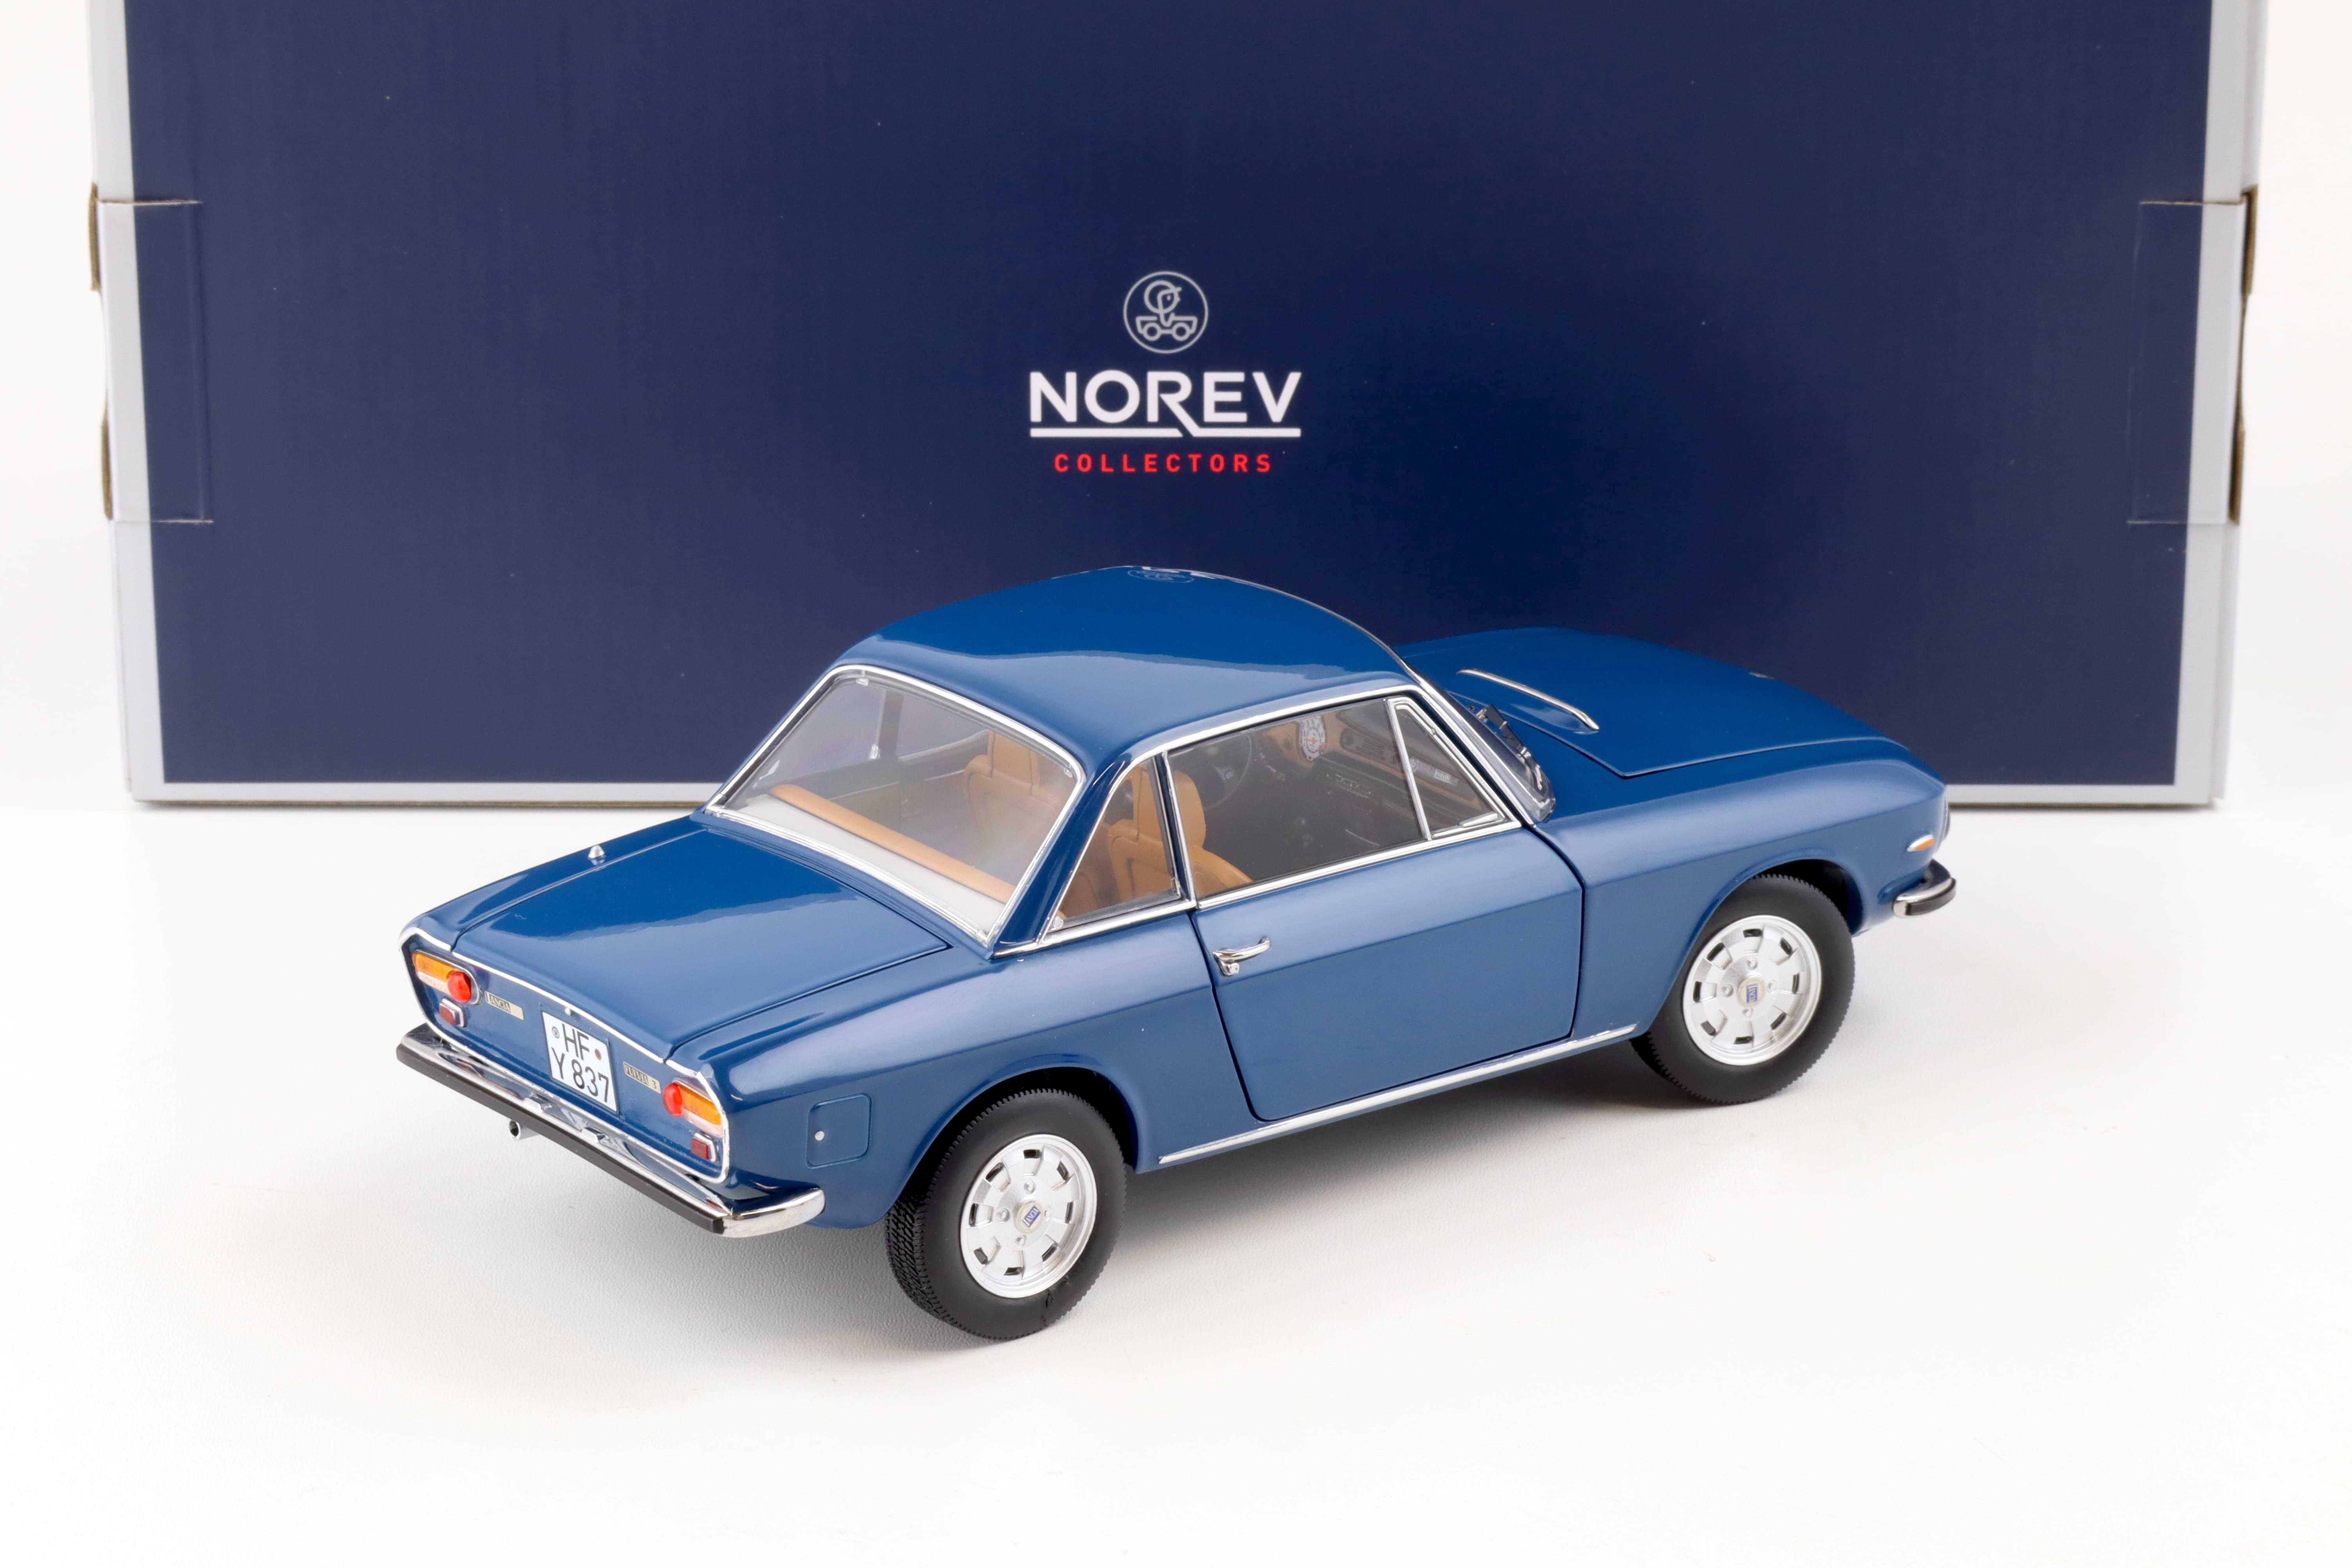 1:18 Norev Lancia Fulvia 3 blue agnano 1975 - Limited Edition 1000 pcs.